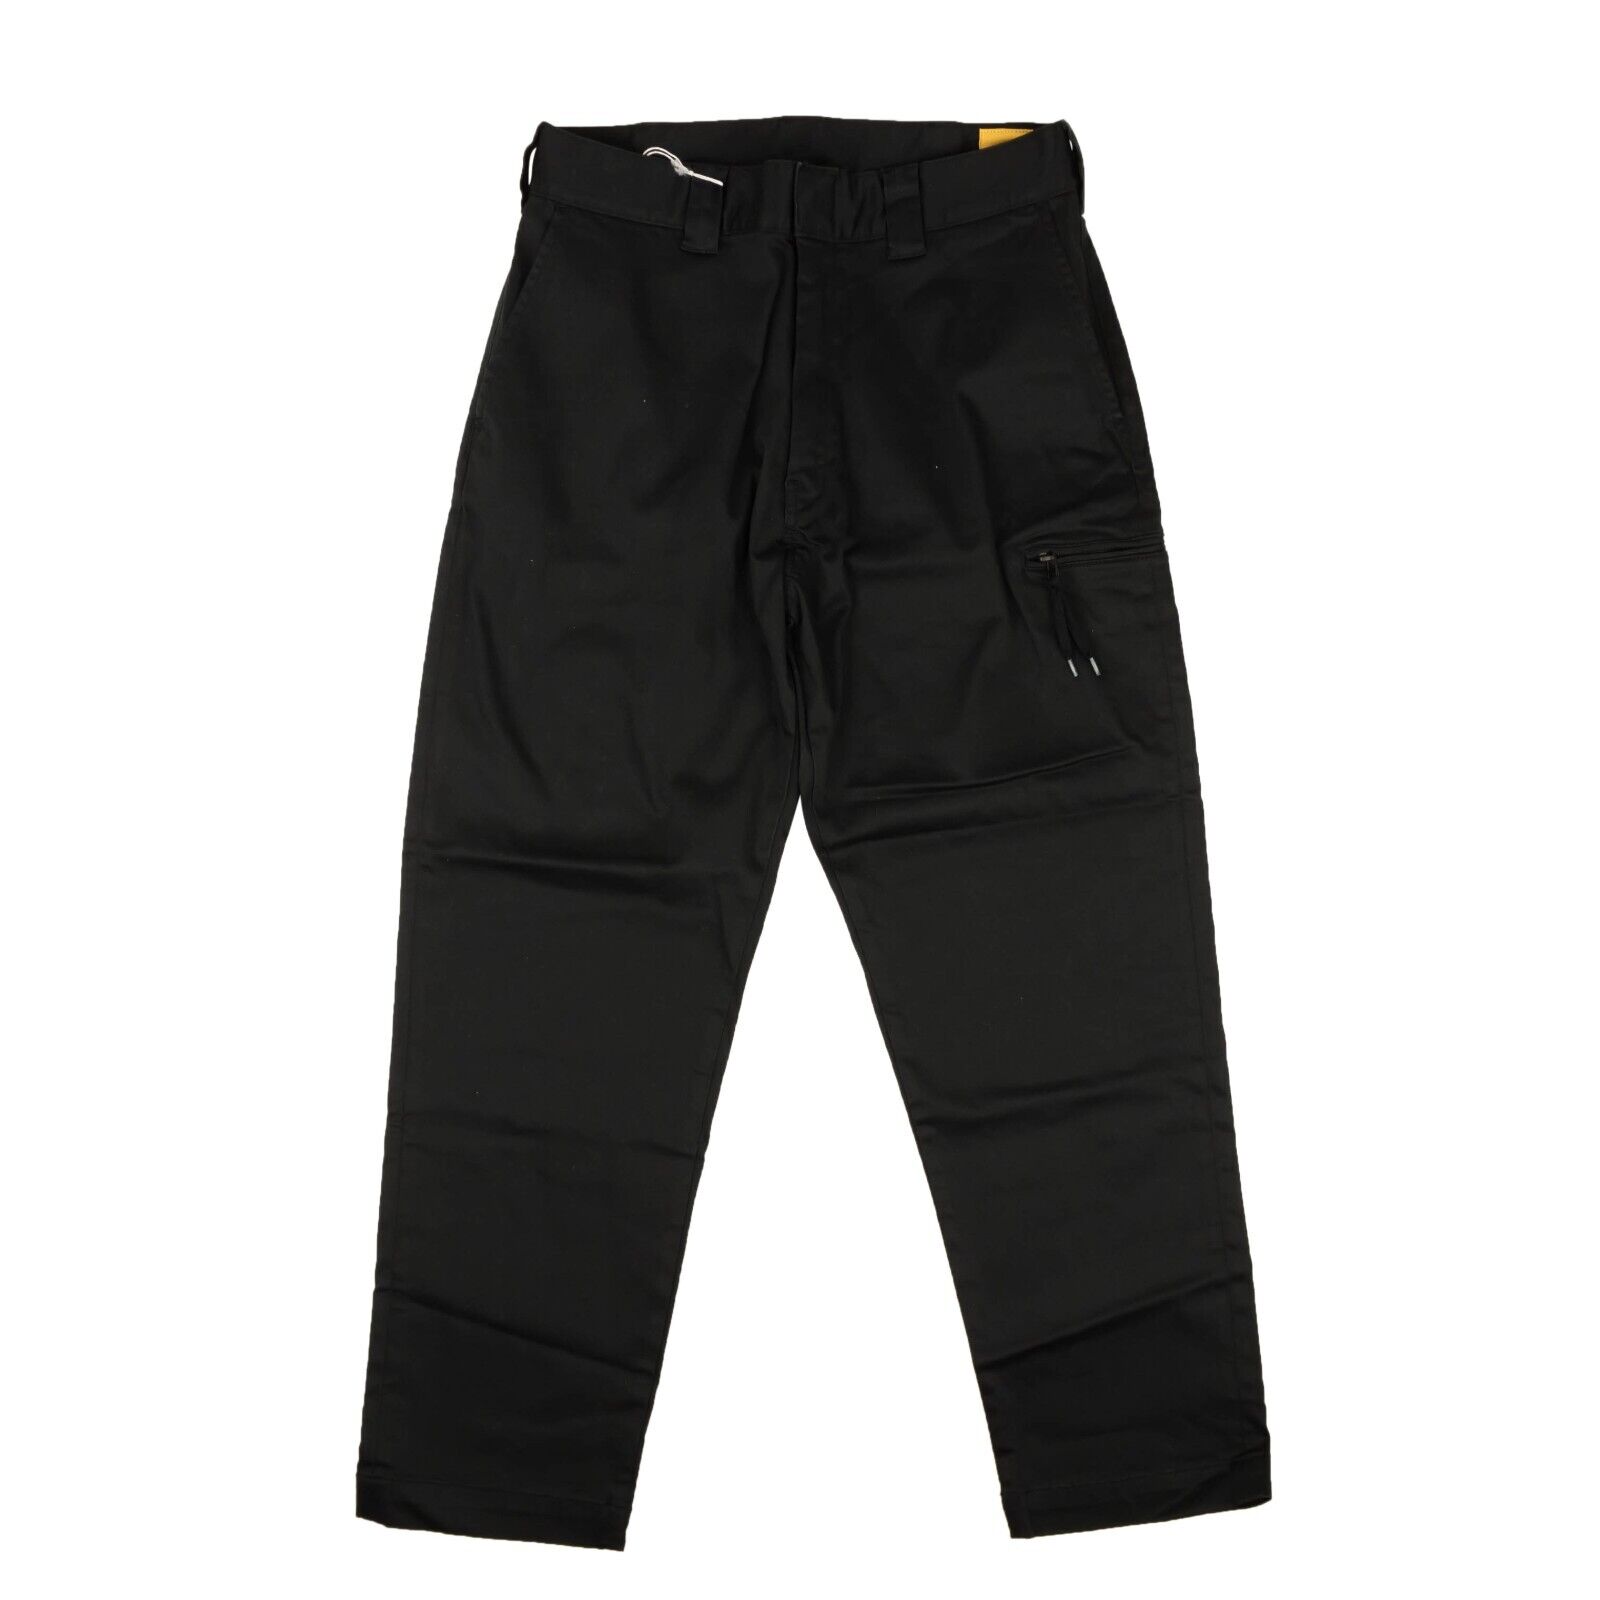 NWT FR2 Black Dick's Pants Size 36/46 $140